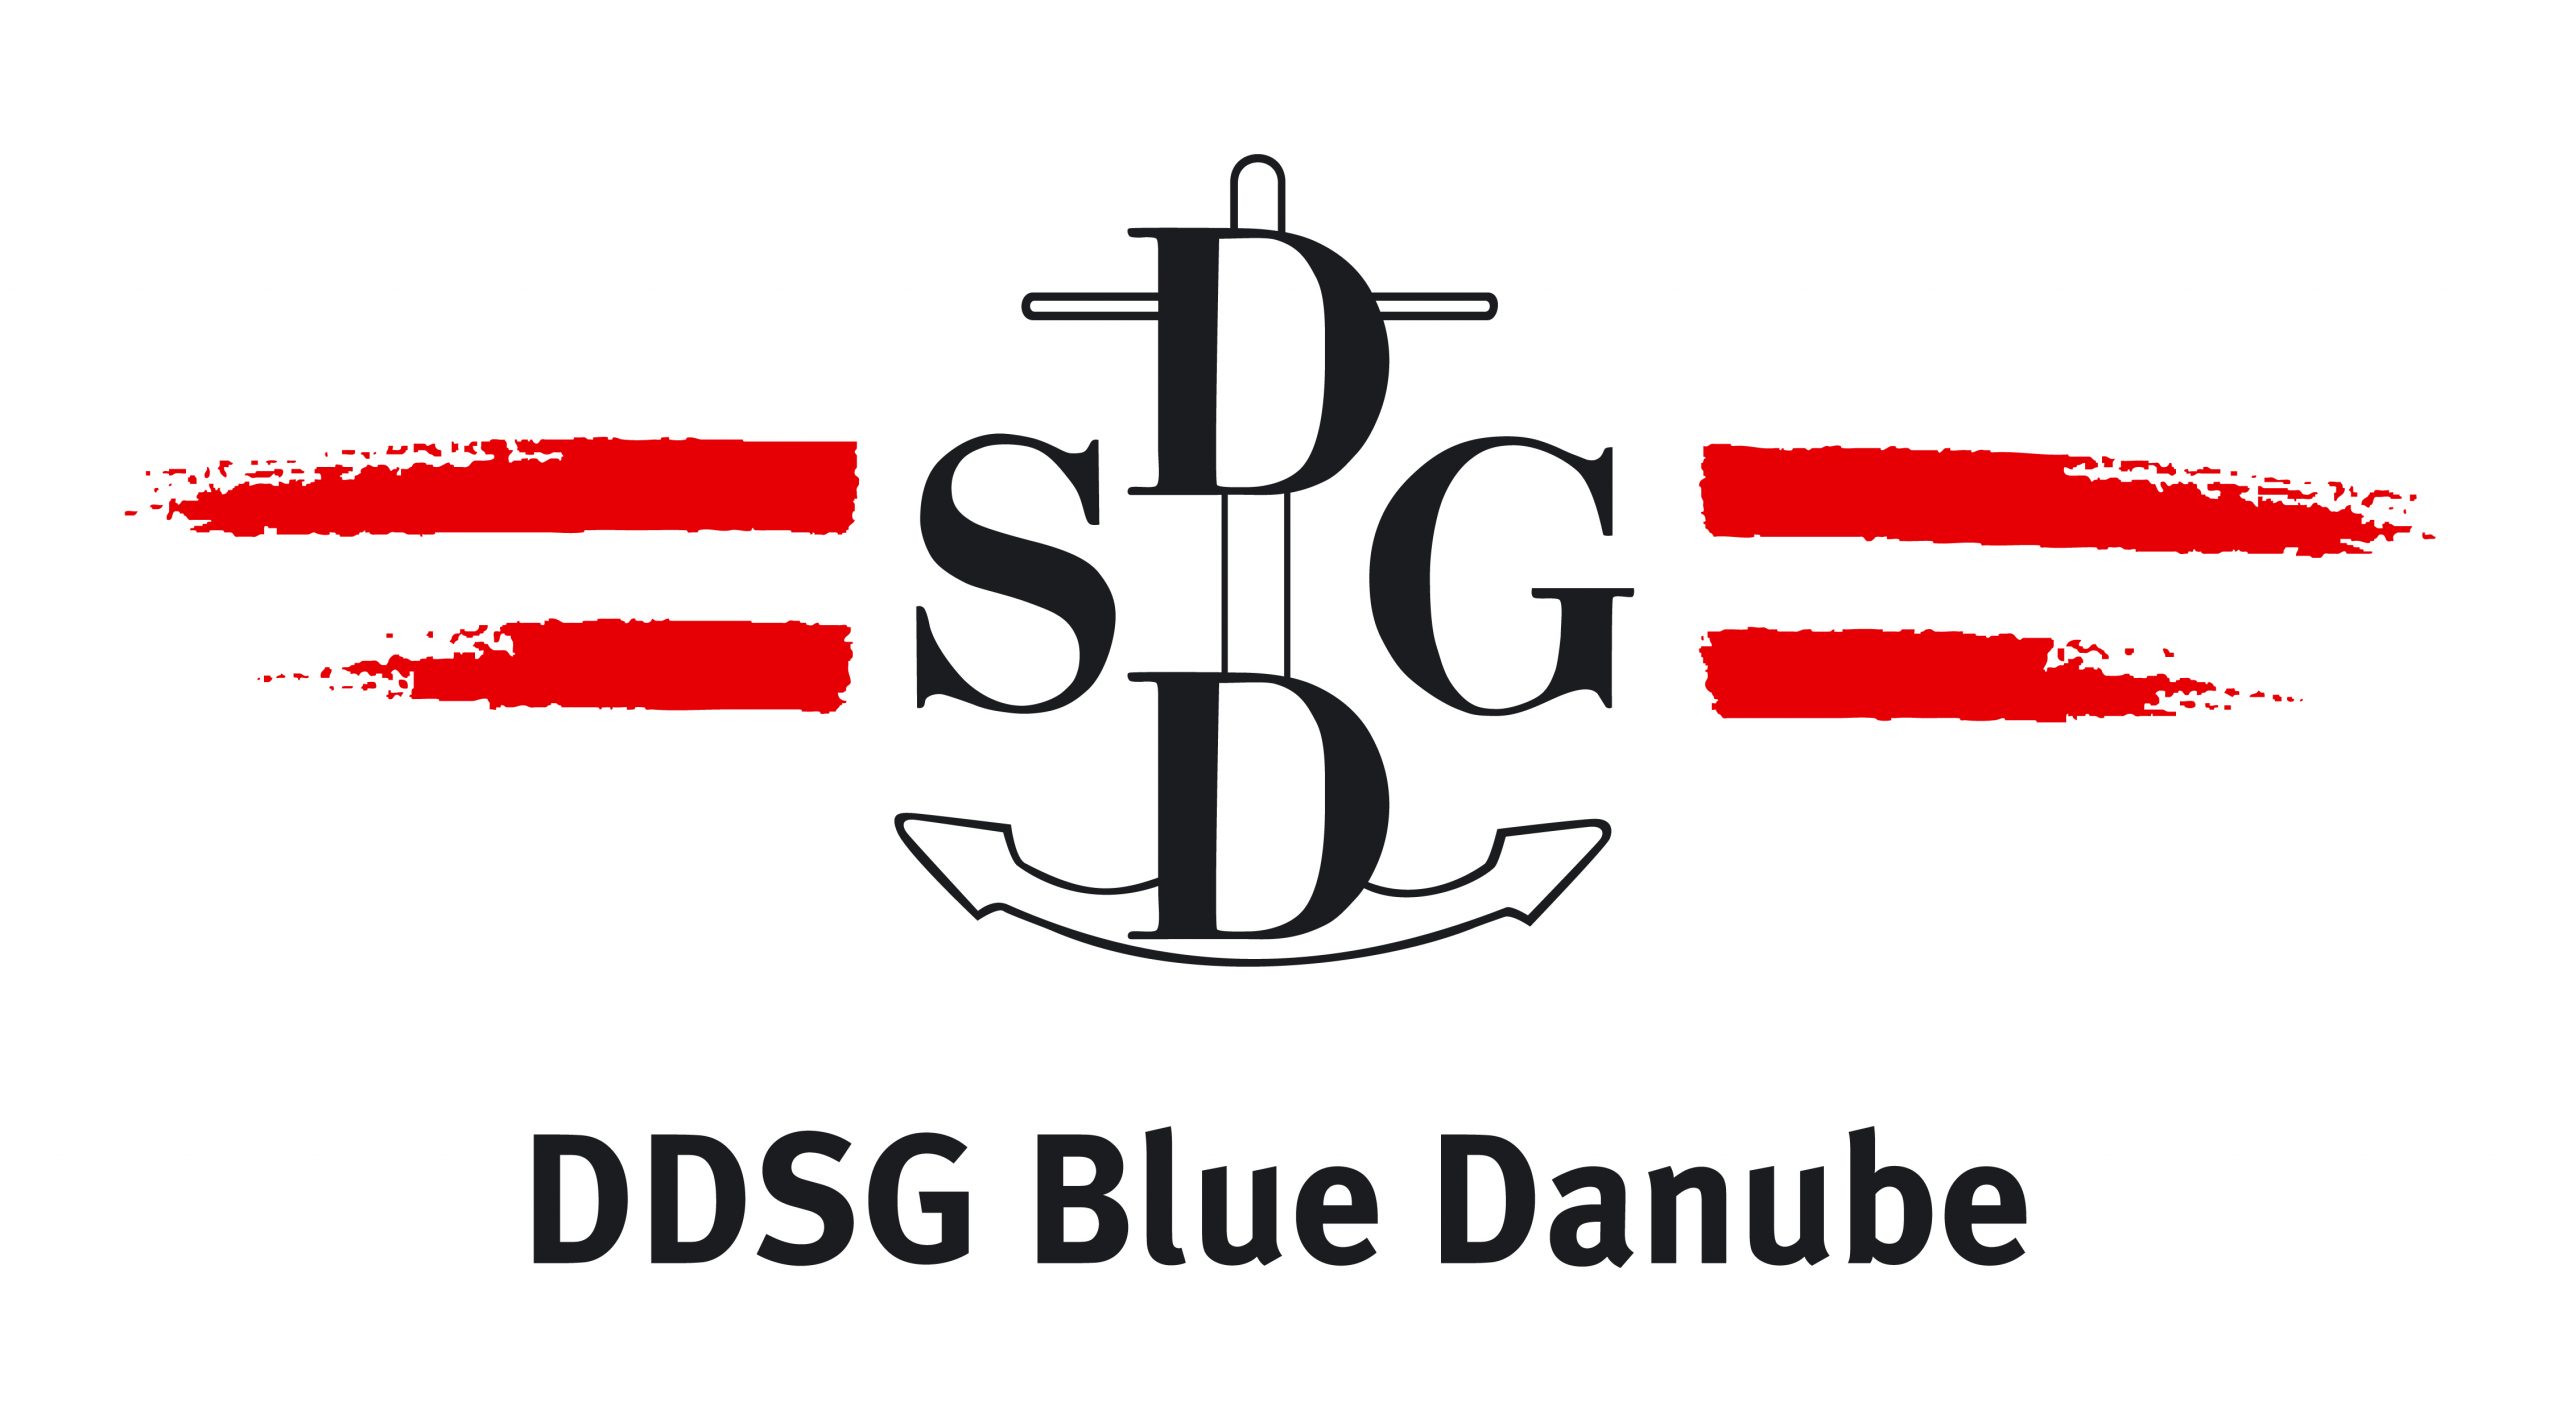 DDSG